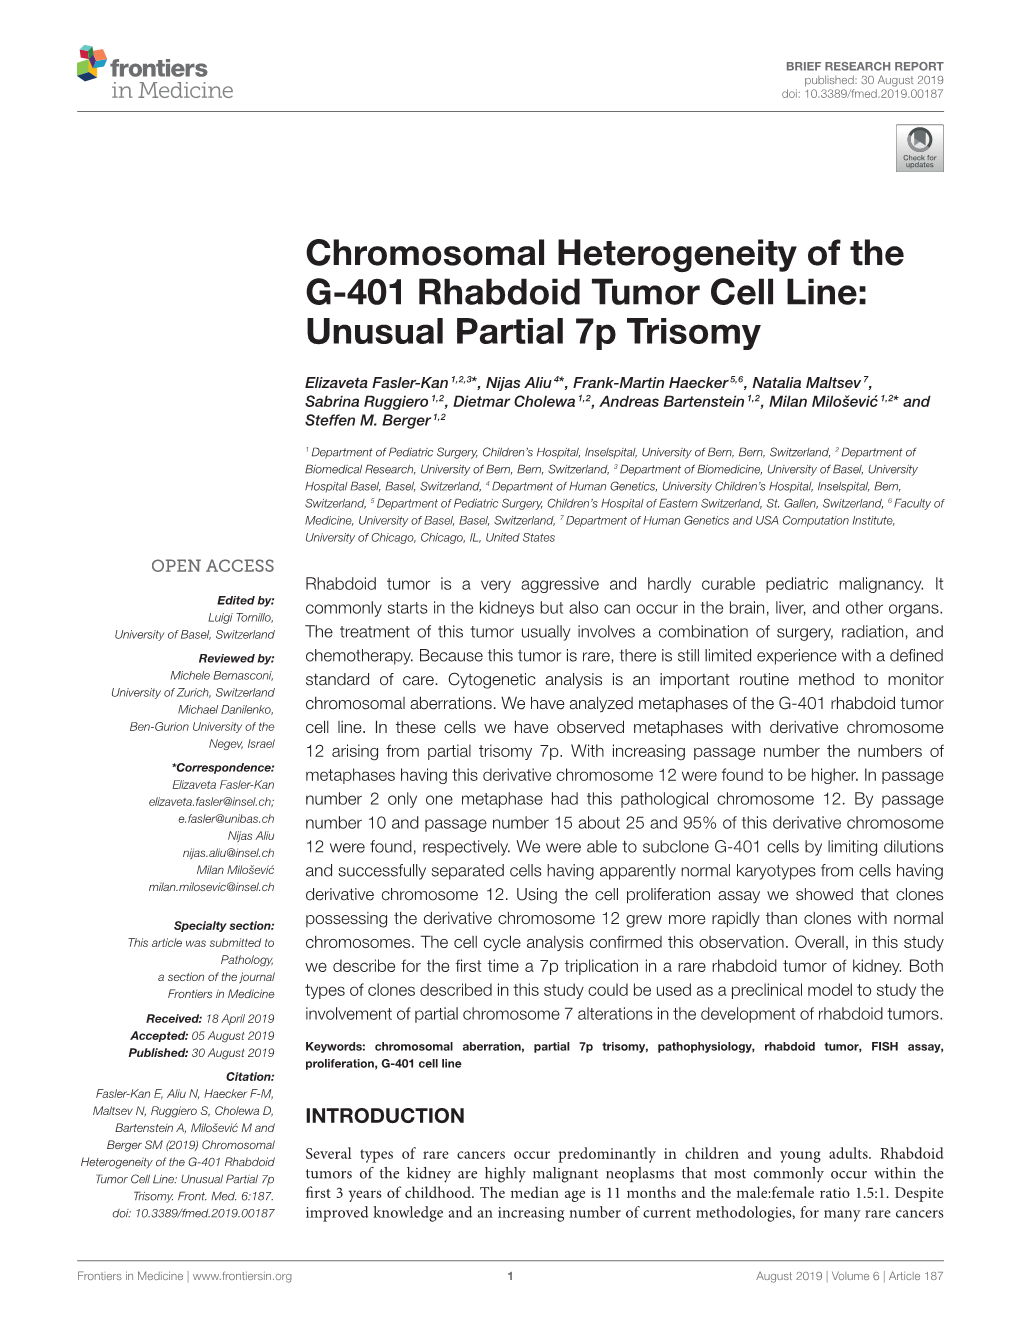 Chromosomal Heterogeneity of the G-401 Rhabdoid Tumor Cell Line: Unusual Partial 7P Trisomy